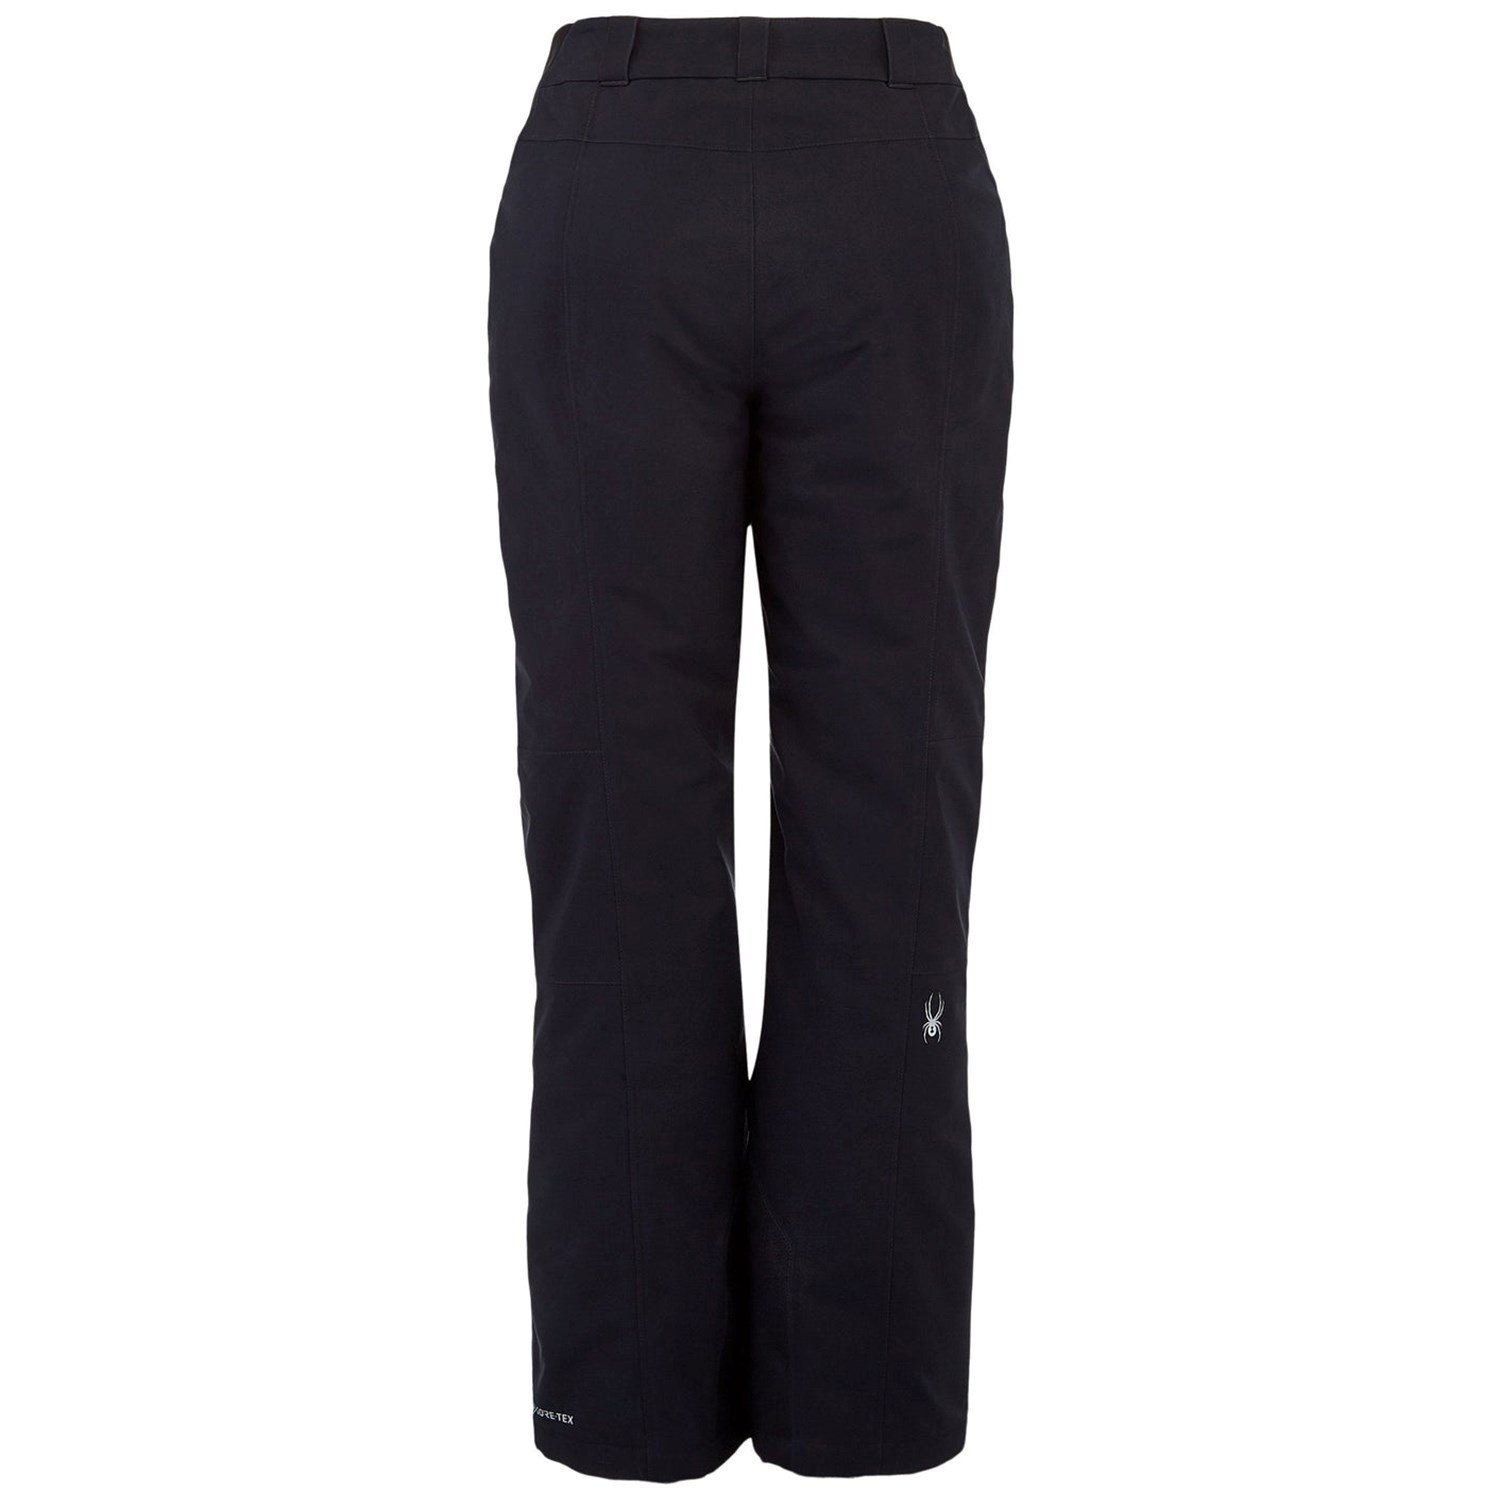 Spyder Winner GORE-TEX Short Pants - Women's